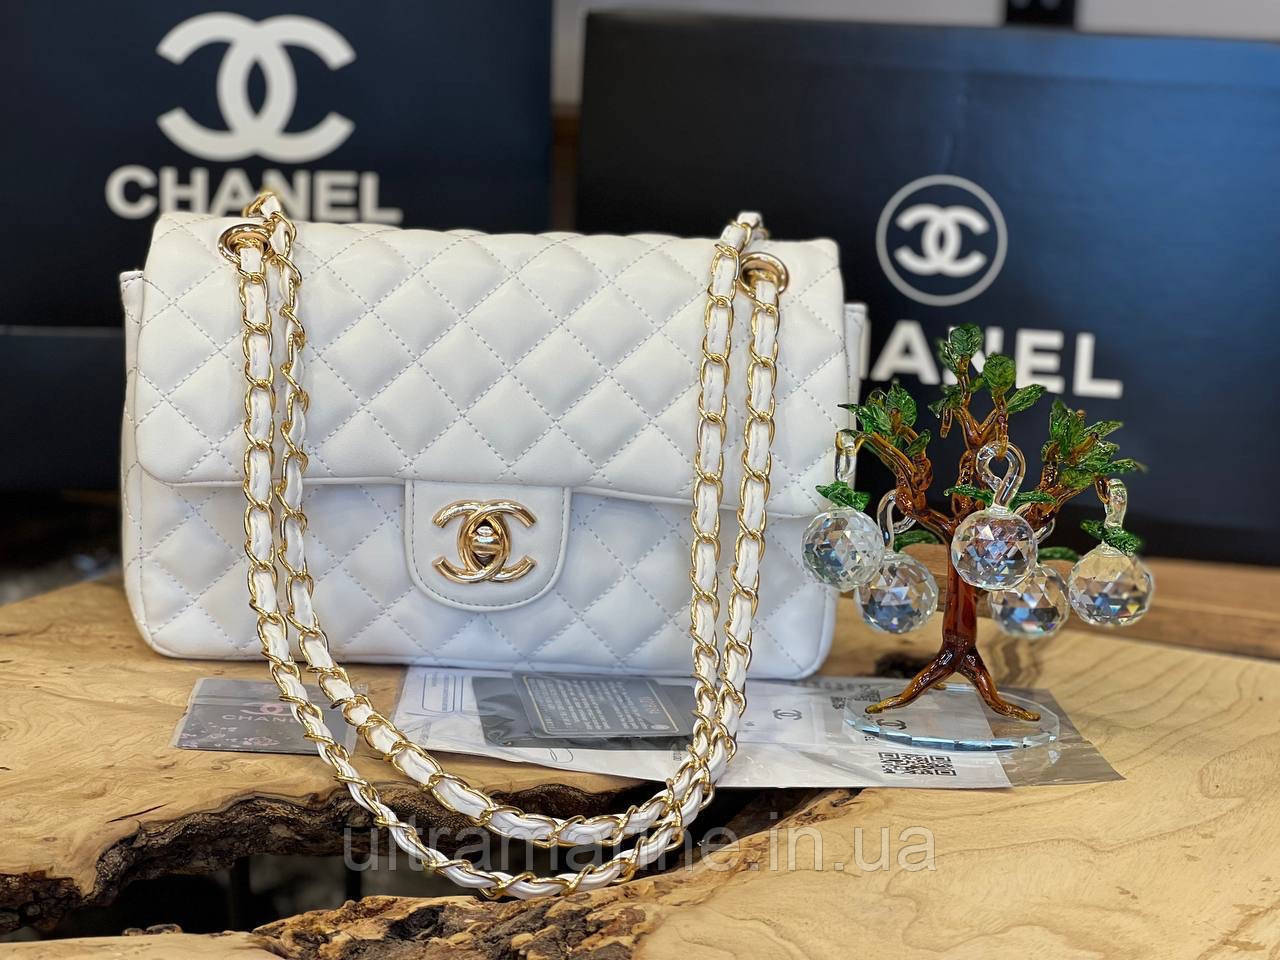 Модна жіноча сумка Chanel Шанель з ручками